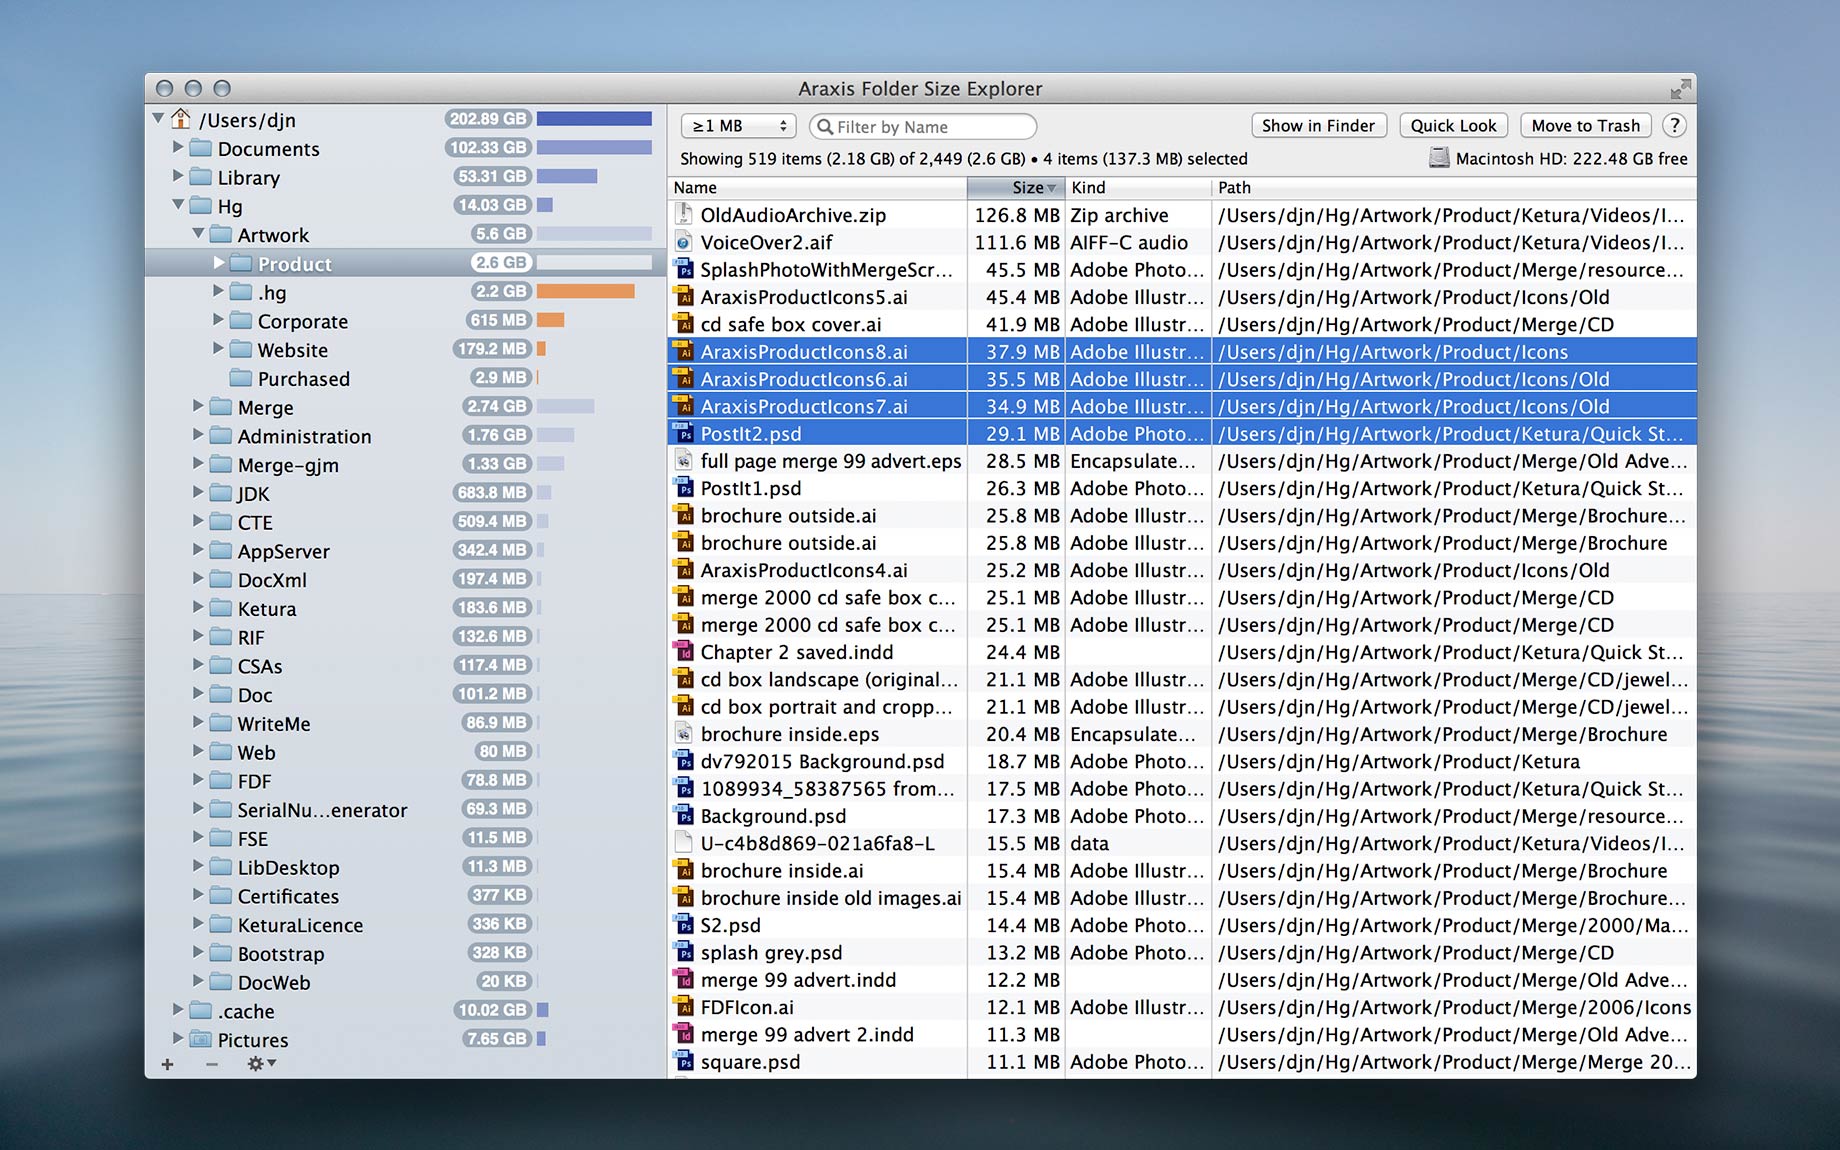 Araxis Folder Size Explorer for OS X screenshot